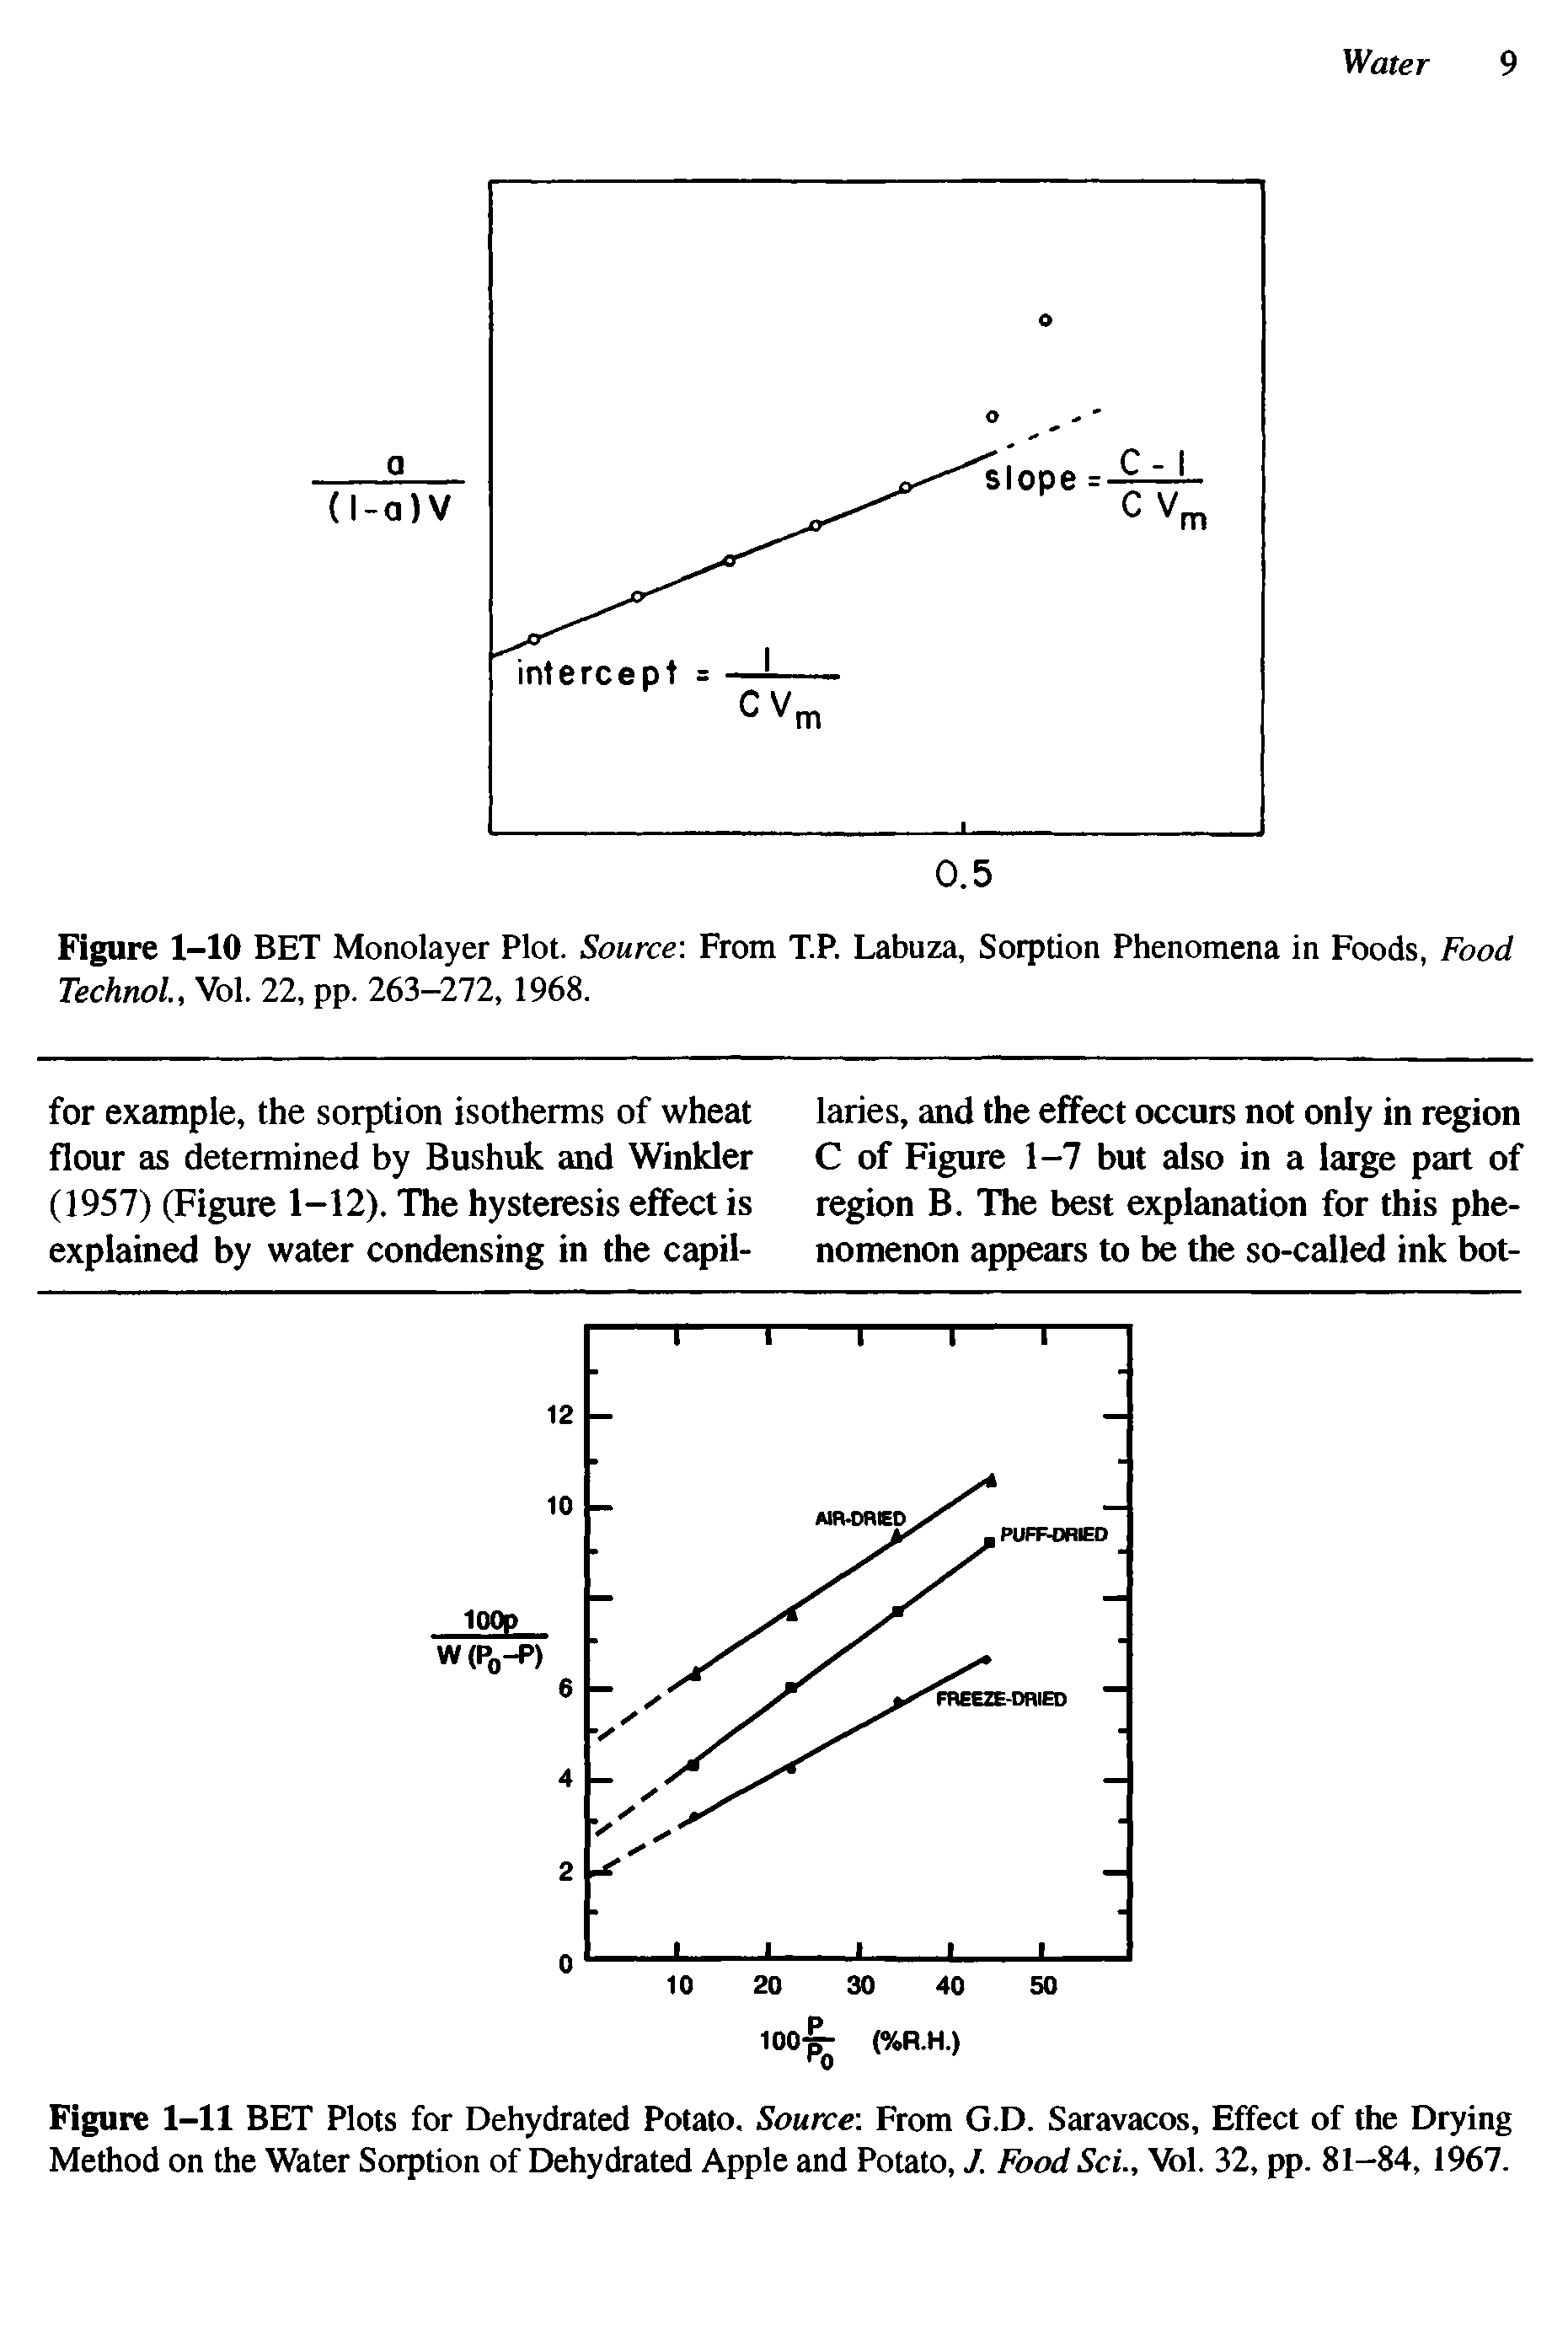 Figure 1-10 BET Monolayer Plot. Source From T.P. Labuza, Sorption Phenomena in Foods, Food Technol., Vol. 22, pp. 263-272, 1968.